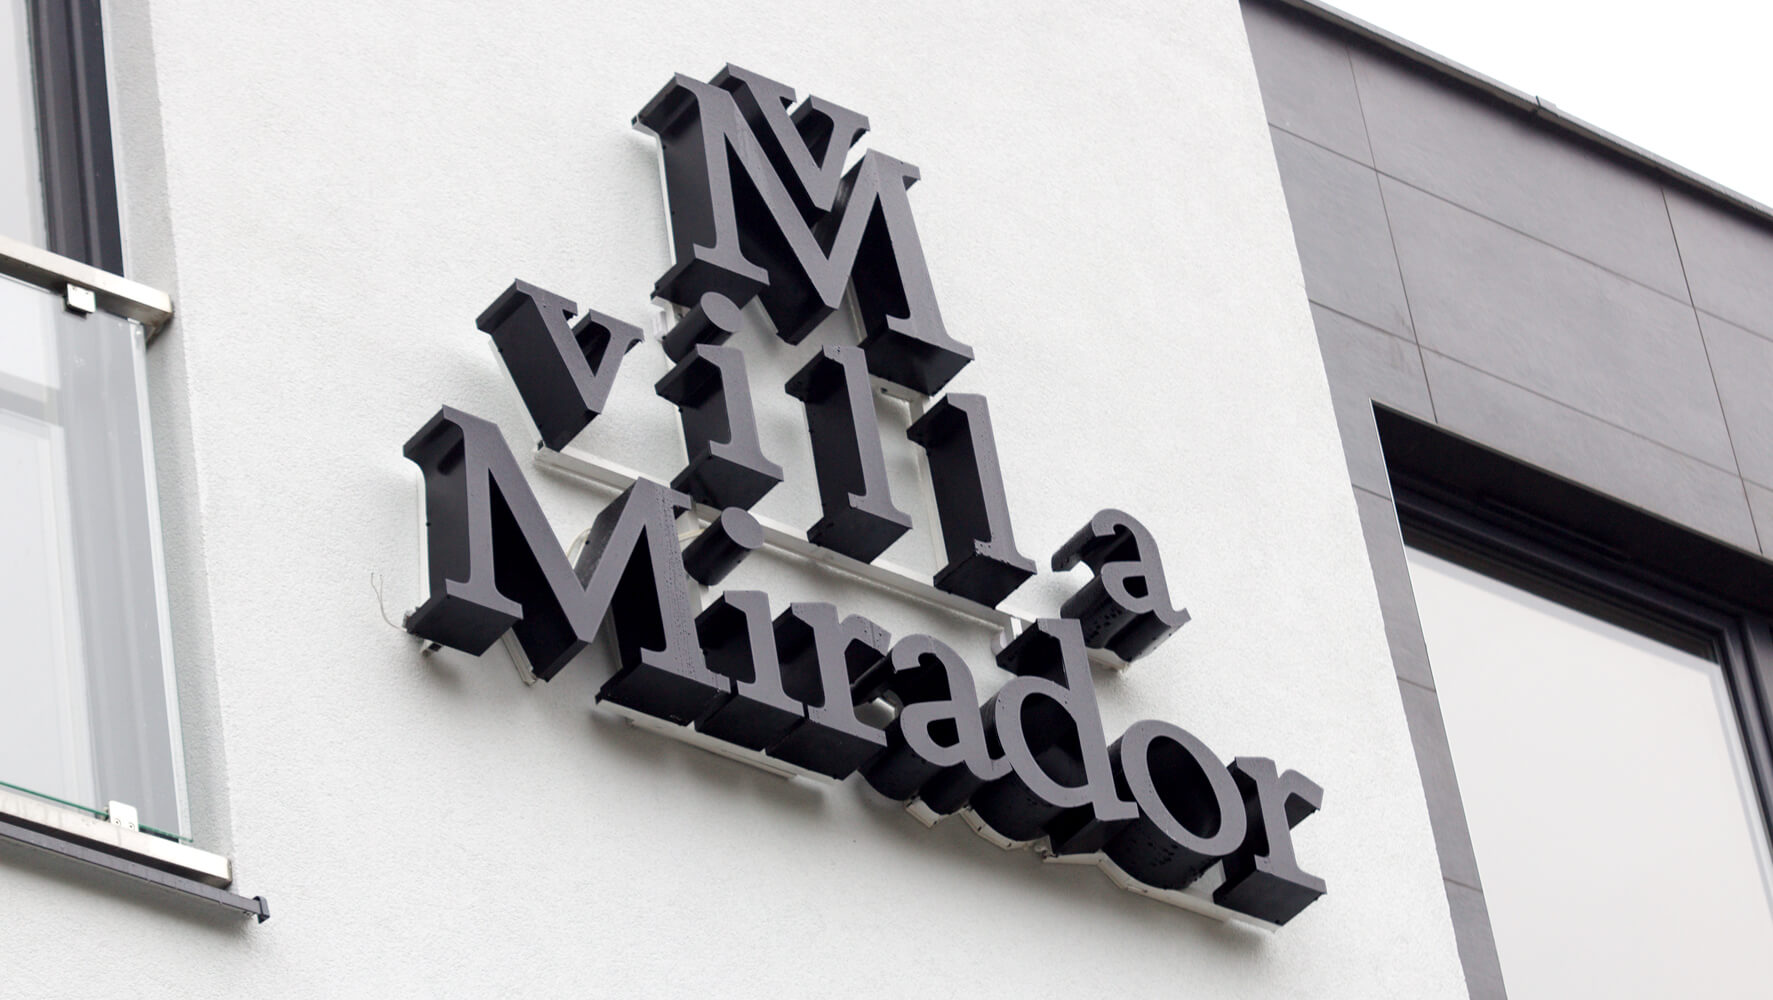 Villa Mirador - Villa Mirador - Räumlicher Leuchtschriftzug an der Fassade